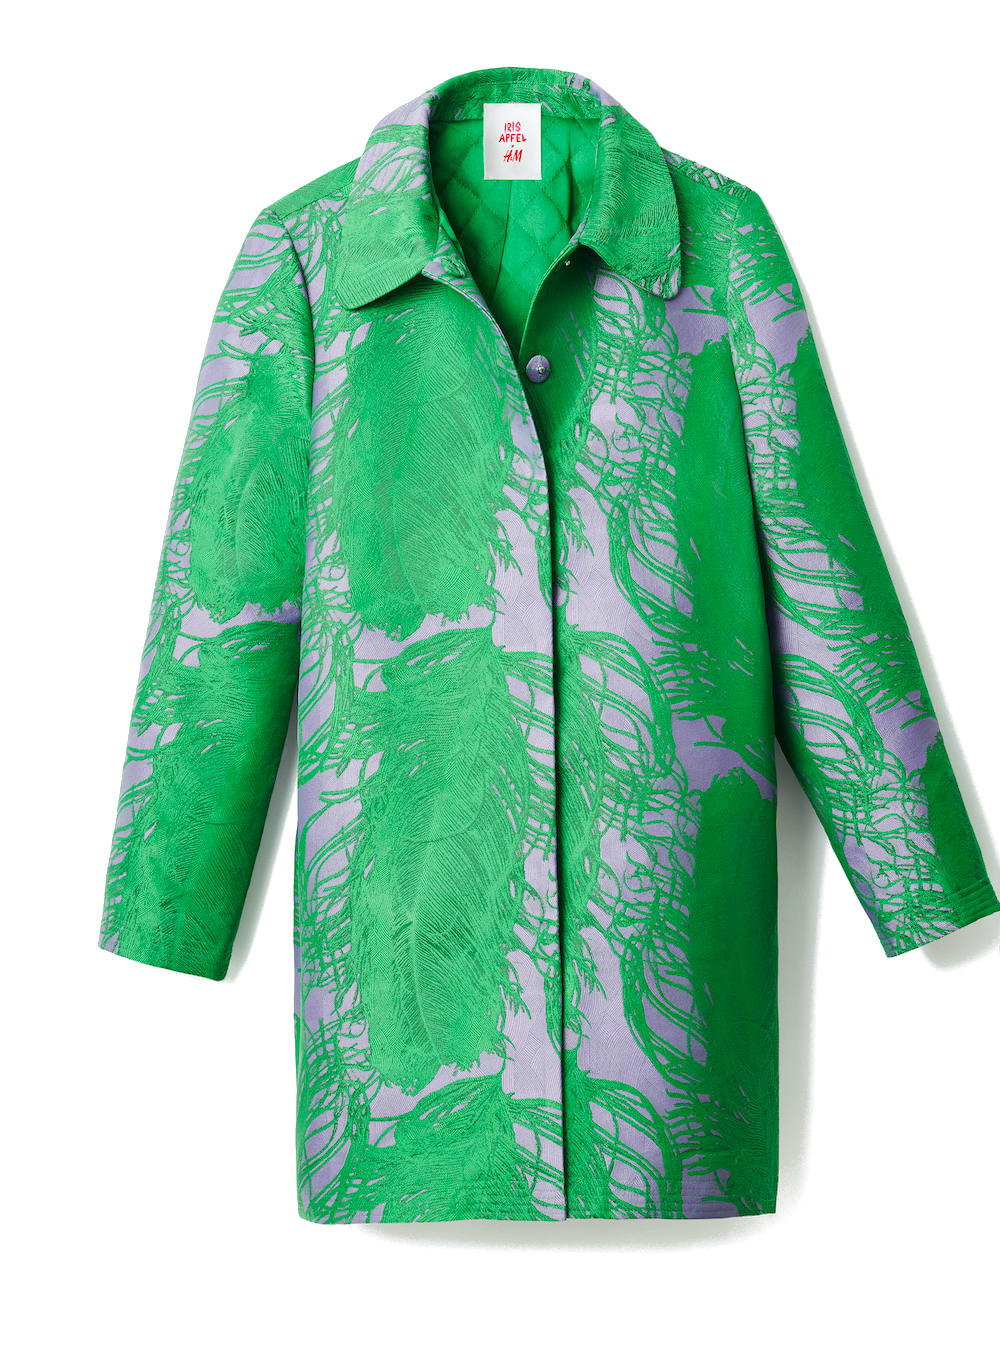 Iris Apfel H&M Coat Polyester Modepilot